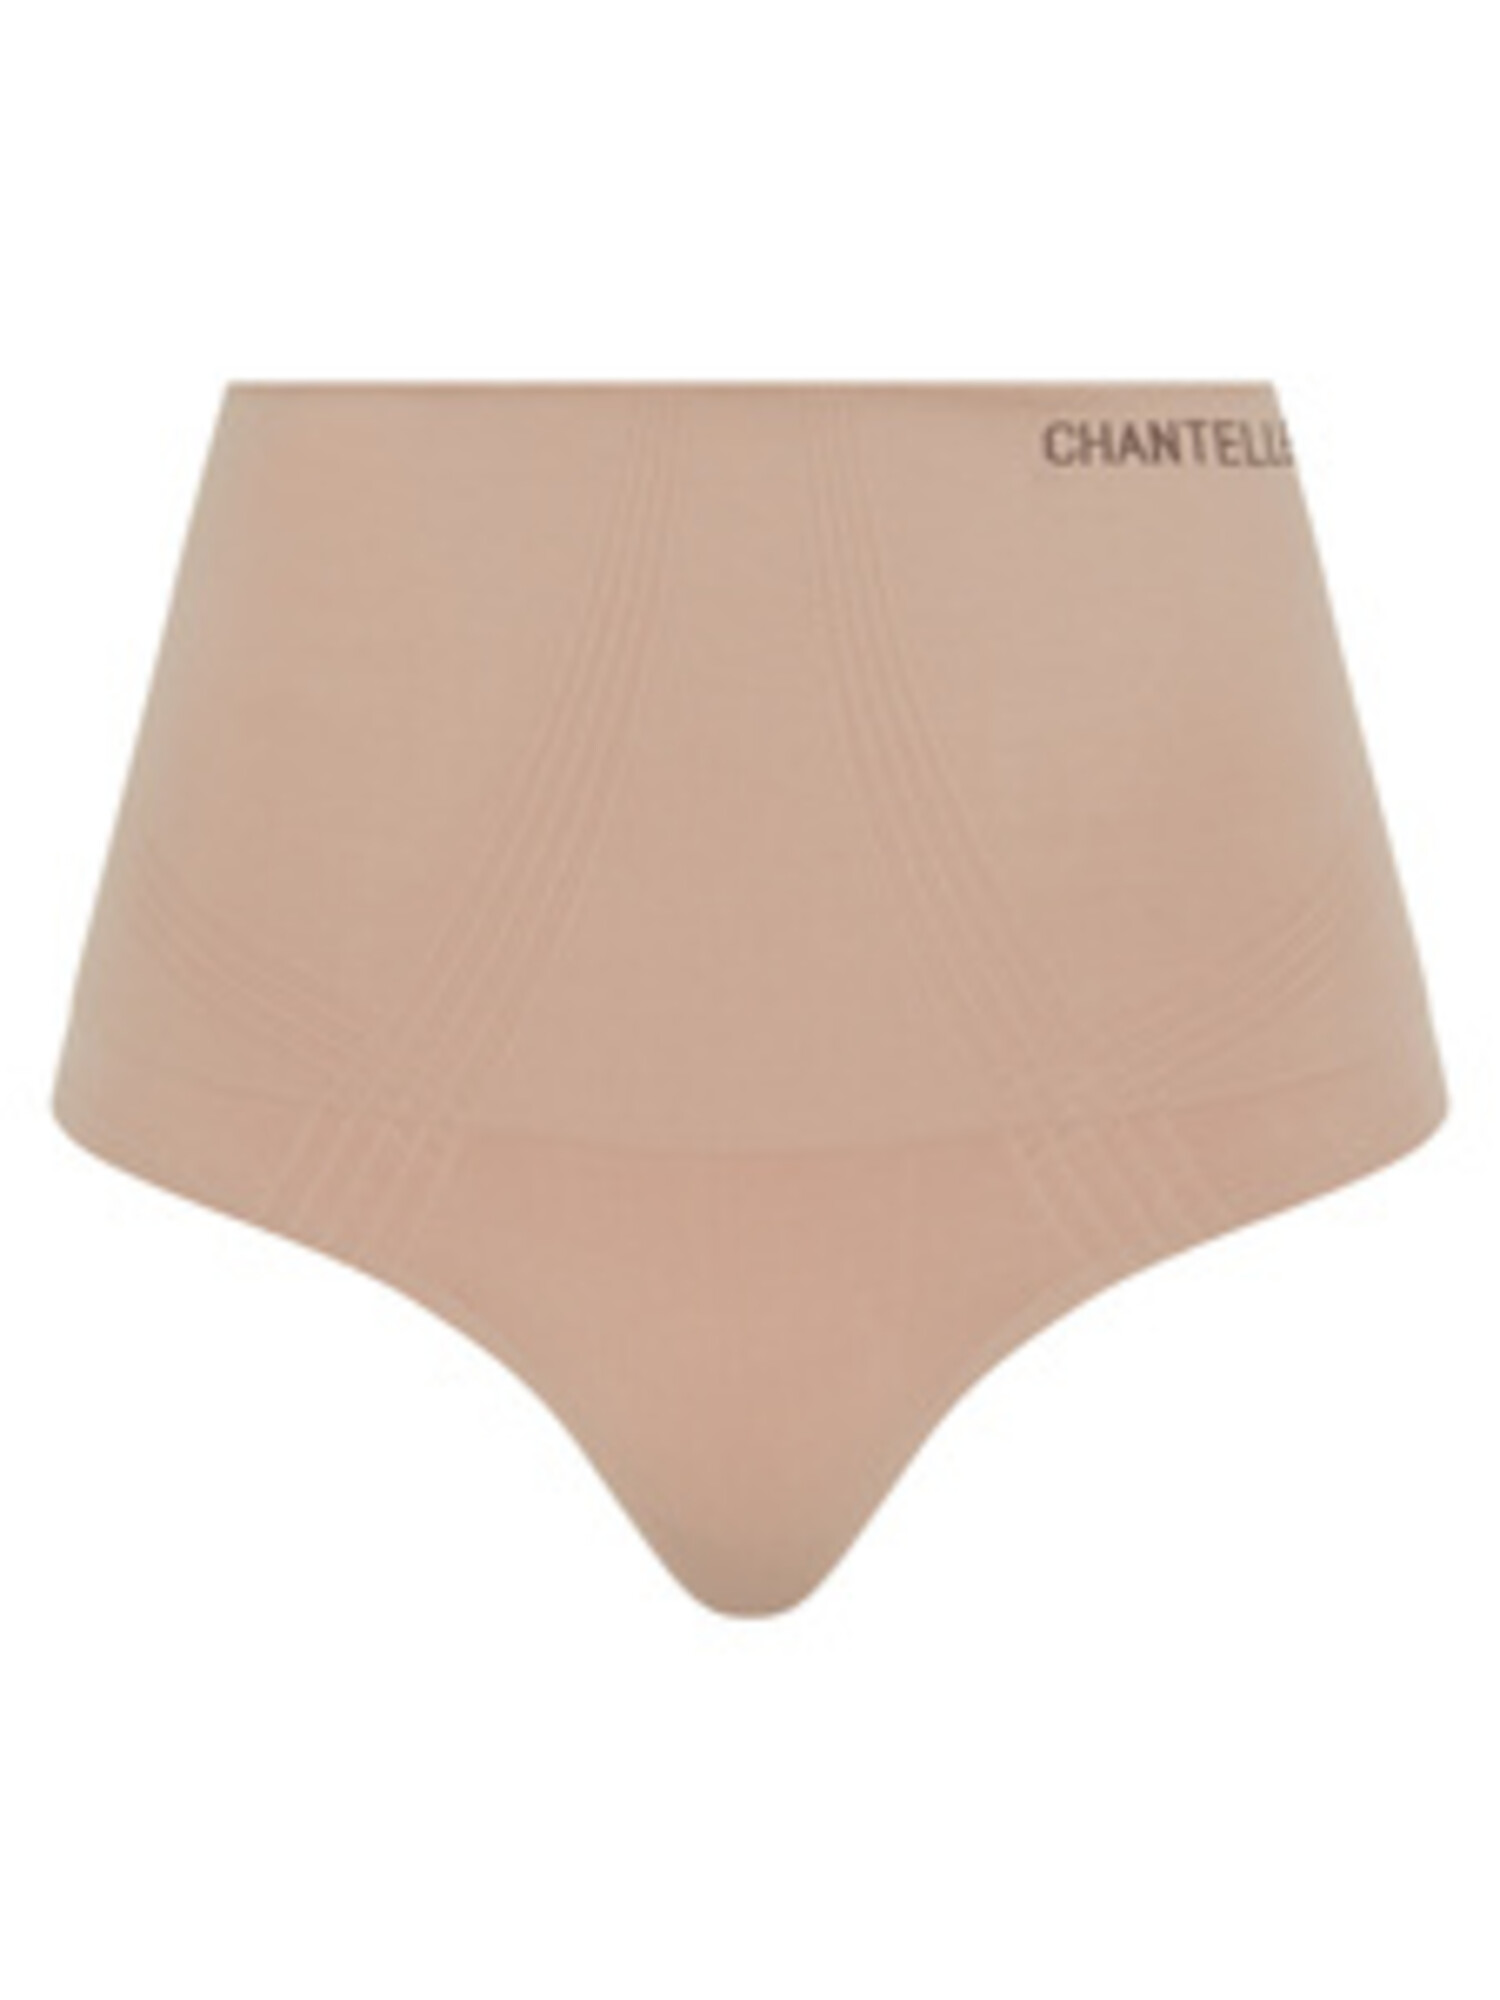 Chantelle Women's Basic Shaping High Waist Brief Shaper Underwear